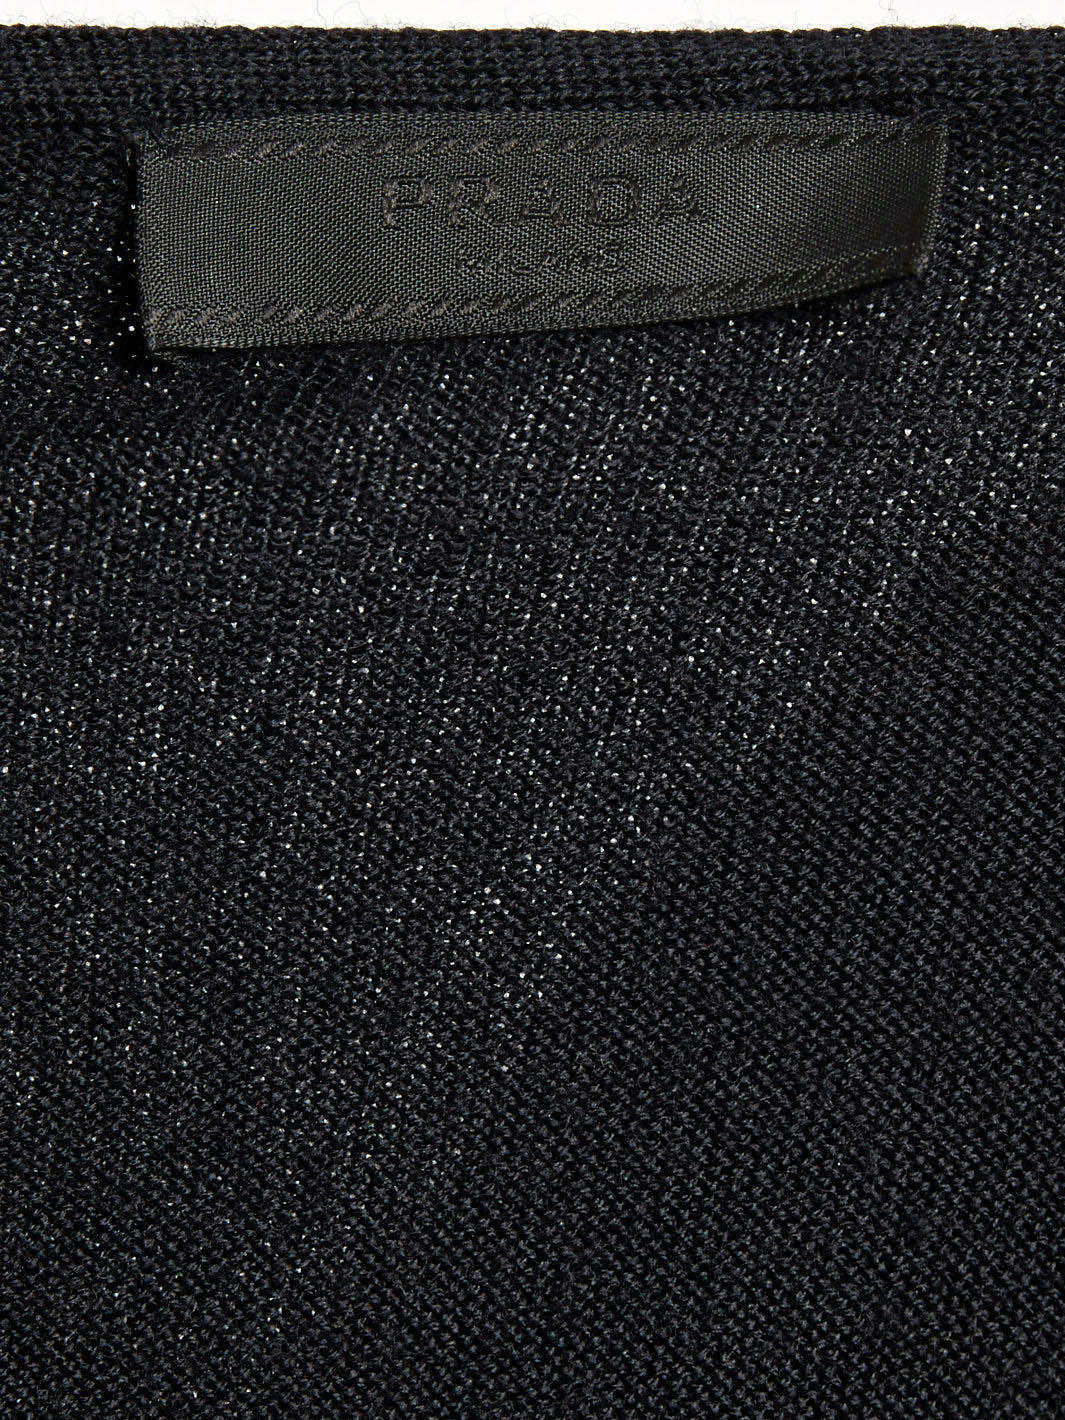 Y2K Prada long sleeve black wool sweater with boat neckline